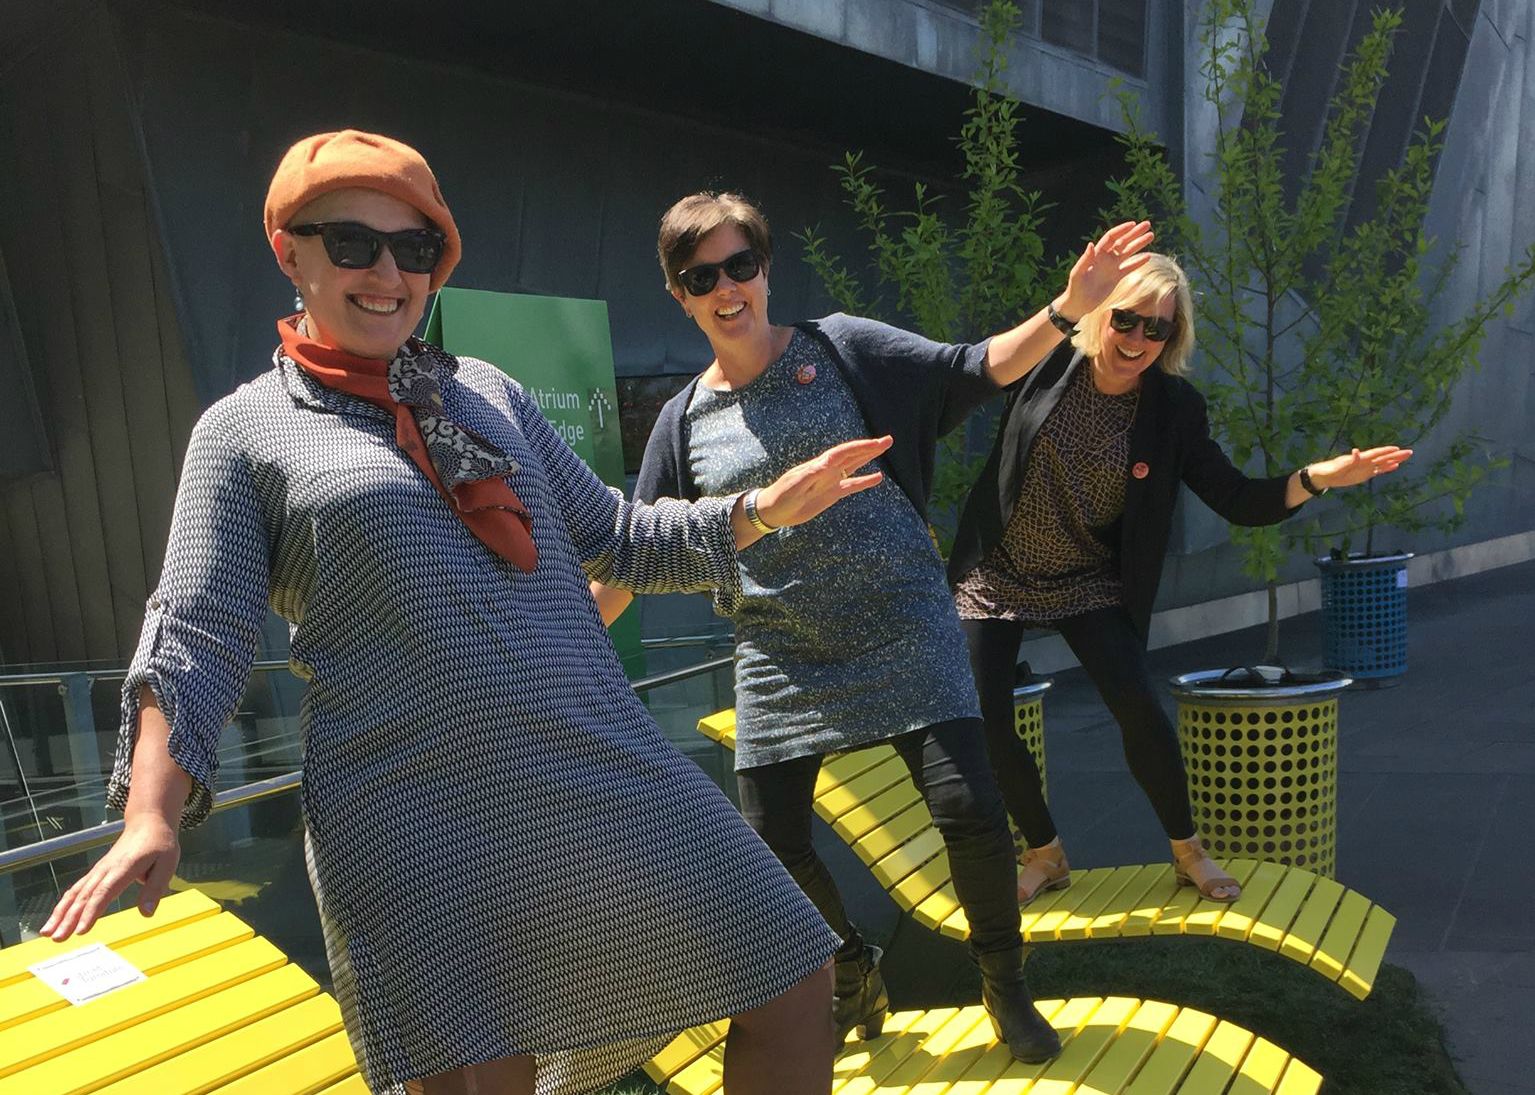 Winning selfie: Jela Ivankovic-Waters, Janis Fisher and Emma Appleton, "surfing chicks" of Merri Station.